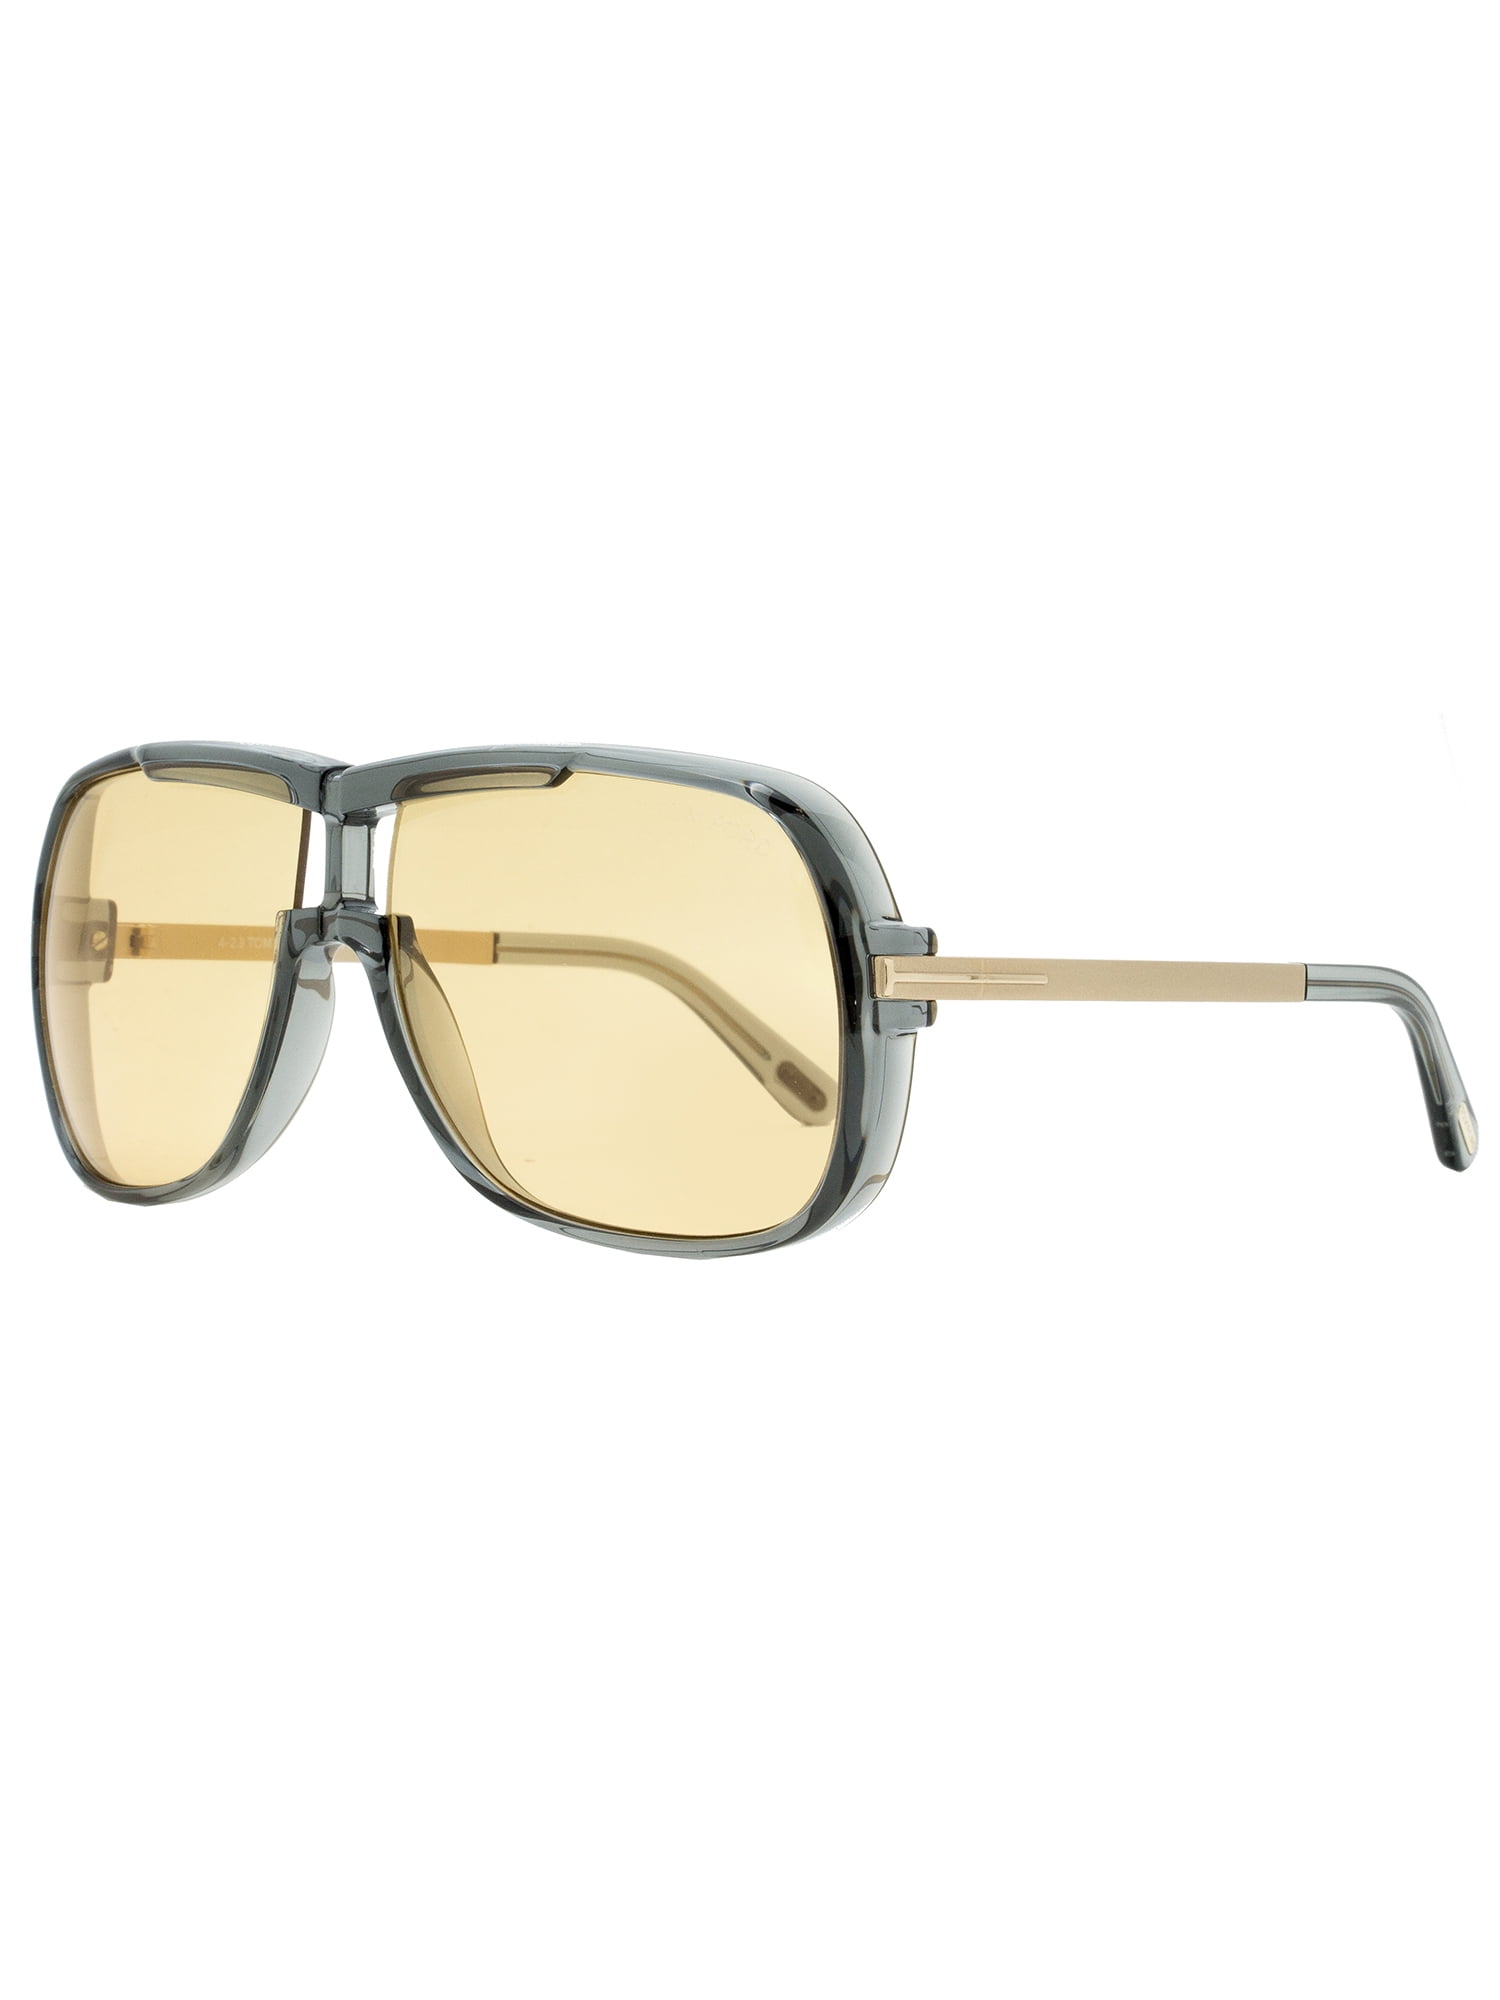 Tom Ford - Tom Ford Square Sunglasses TF800 Caine 20E Gray/Gold 62mm